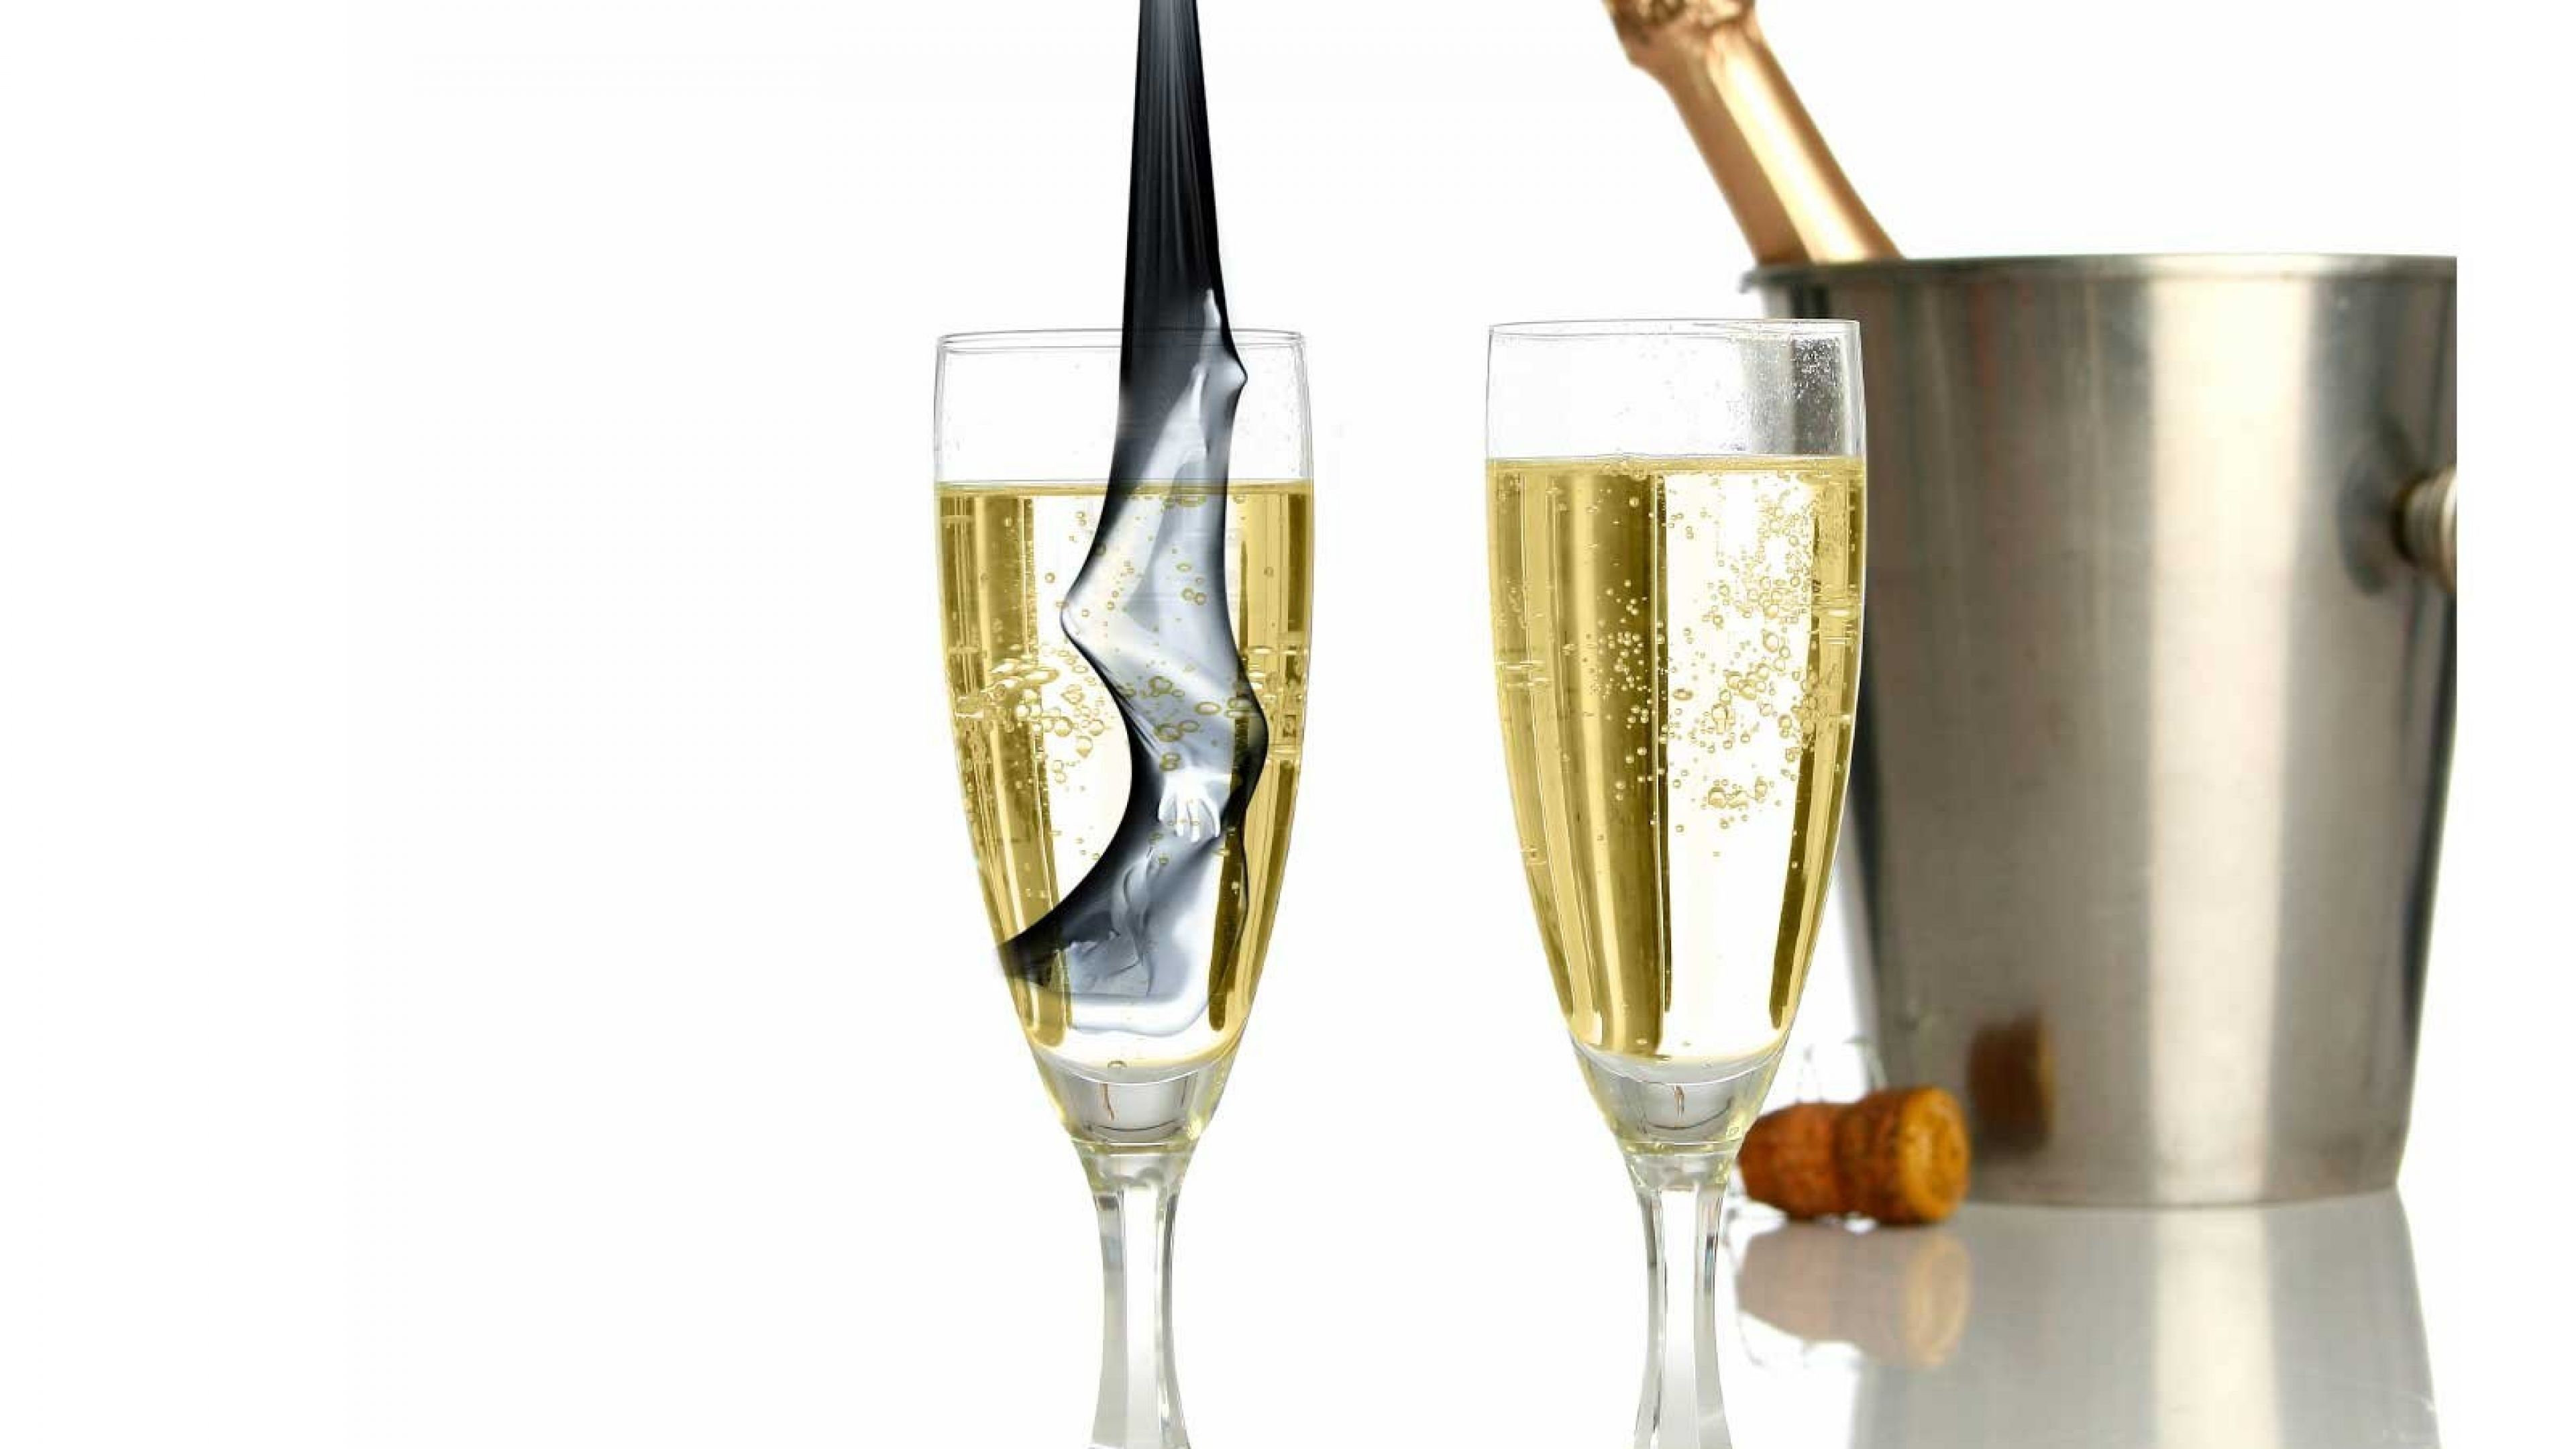 Download Wallpaper 3840x2160 Champagne, Wine glasses, bottle 4K ...